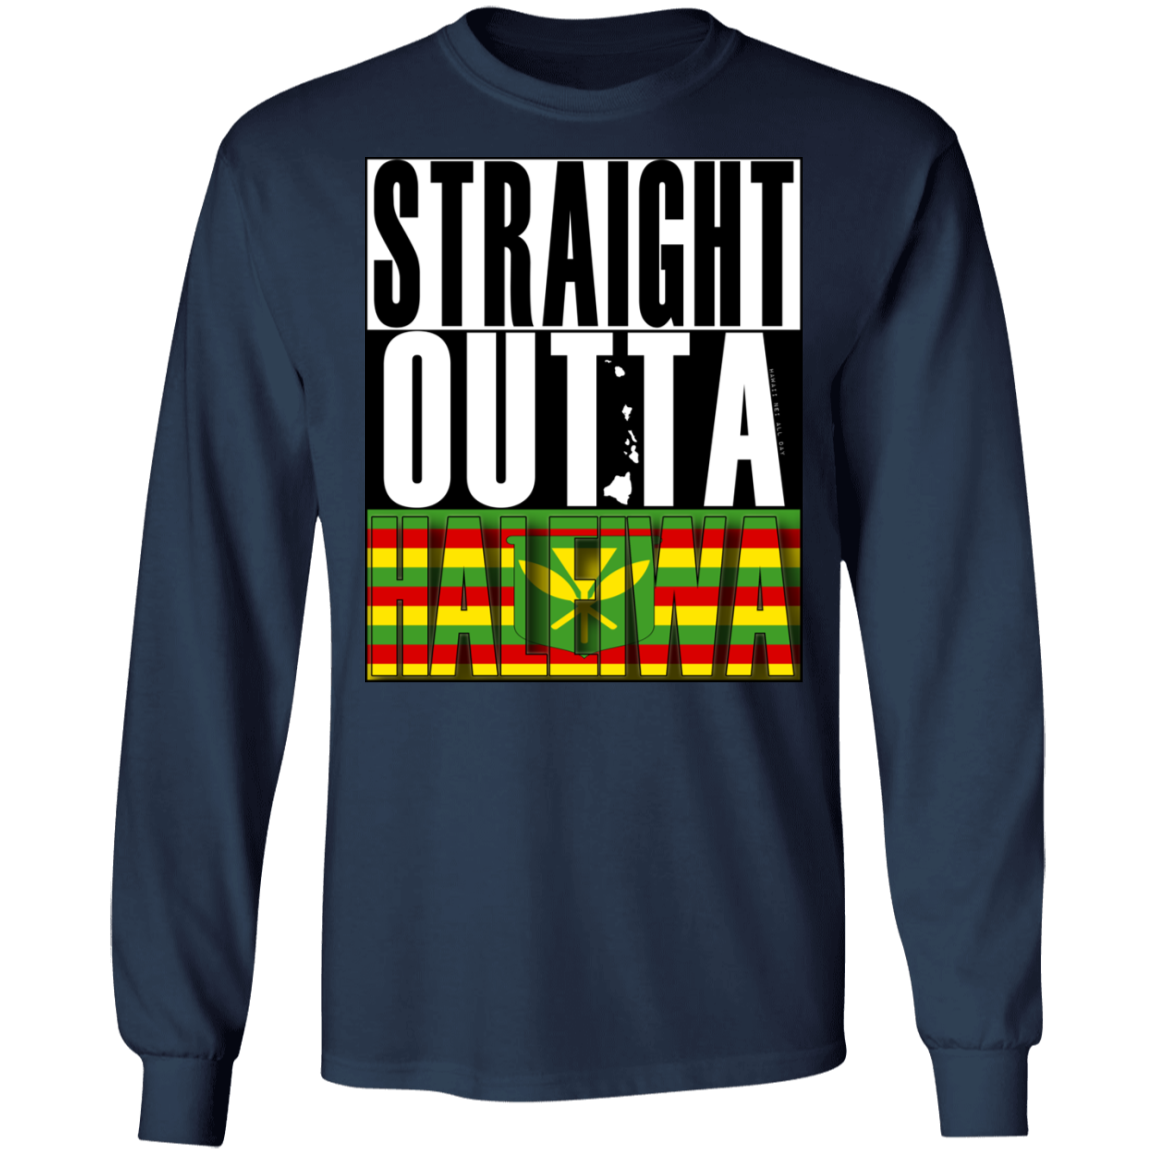 Straight Outta Haleiwa(Kanaka Maoli) LS T-Shirt, T-Shirts, Hawaii Nei All Day